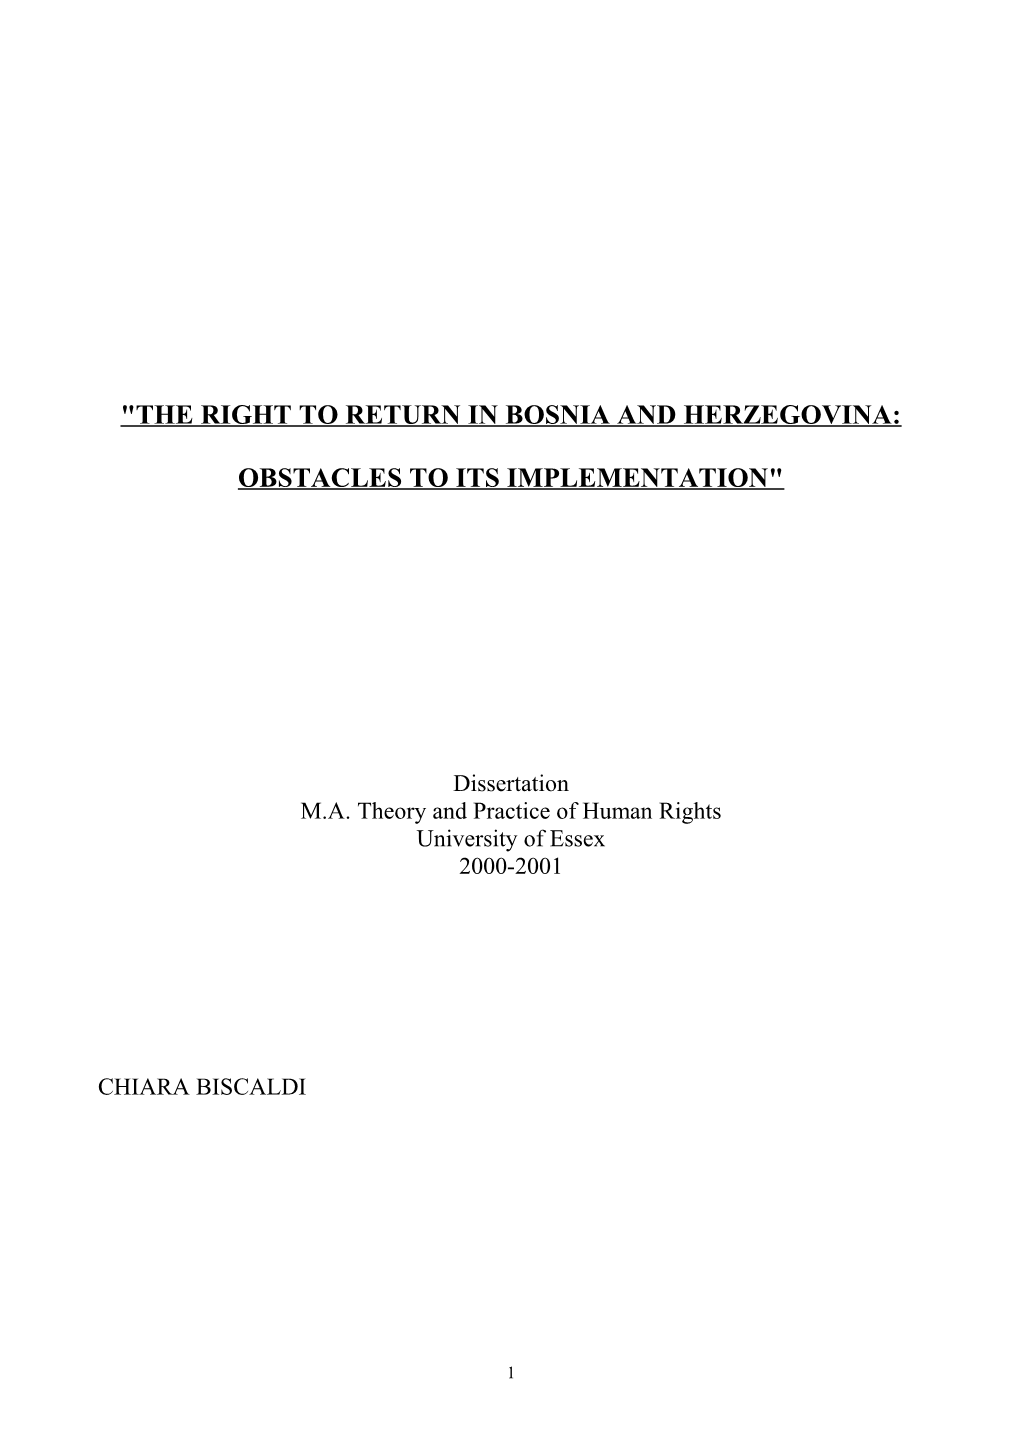 The Right to Return: Legal Framework